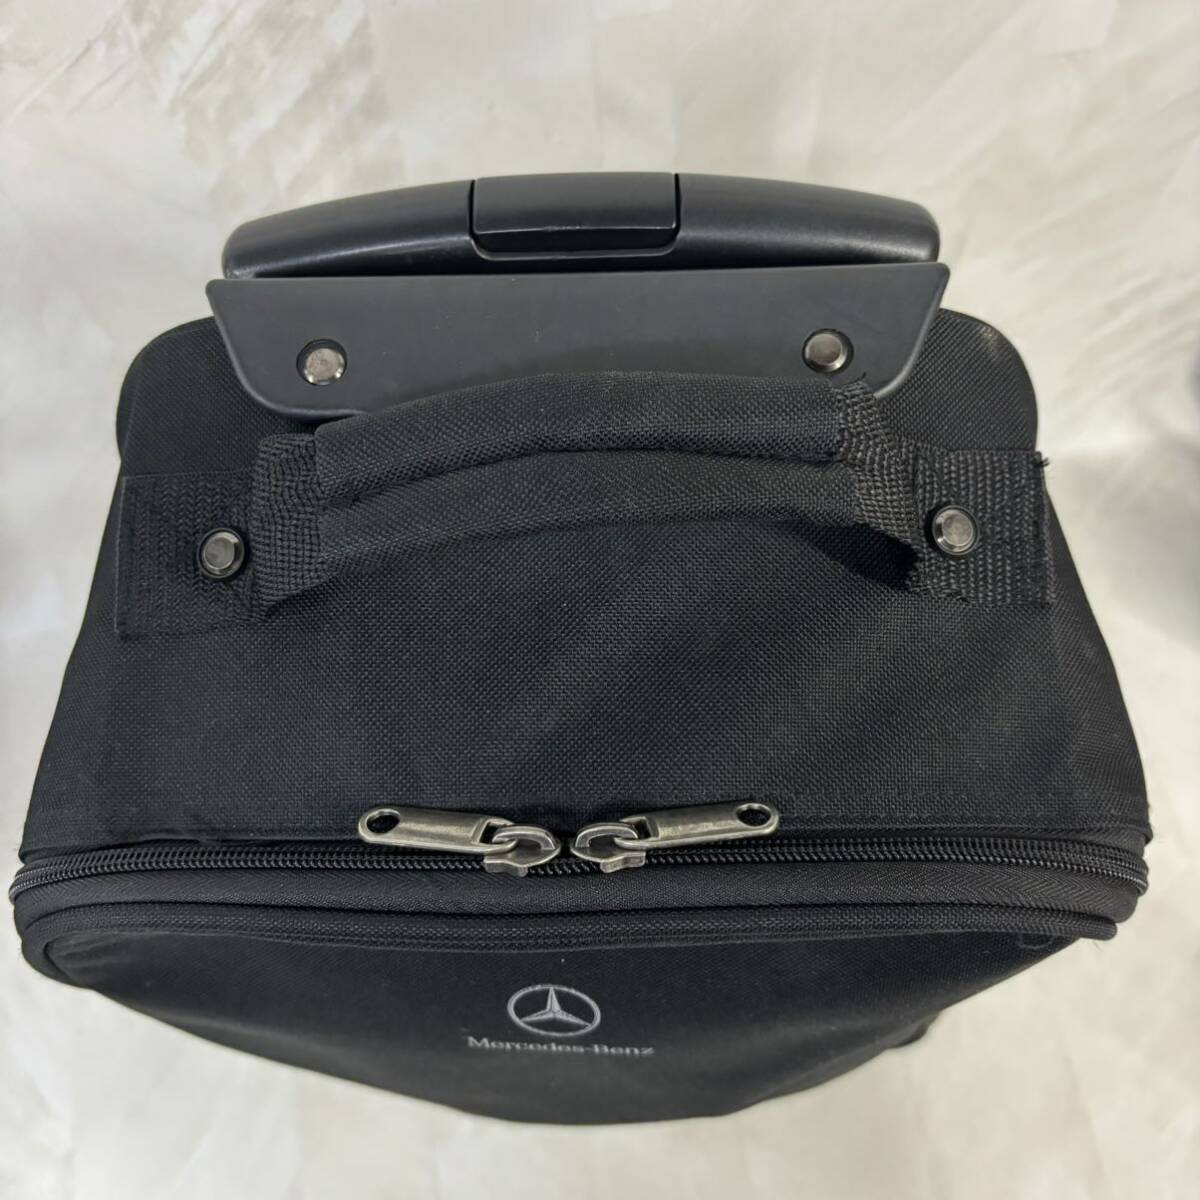 240426- Mercedes Benz メルセデスベンツ キャリーバッグ ブラック キャリーケース 旅行 鞄 バッグ スーツケースの画像4